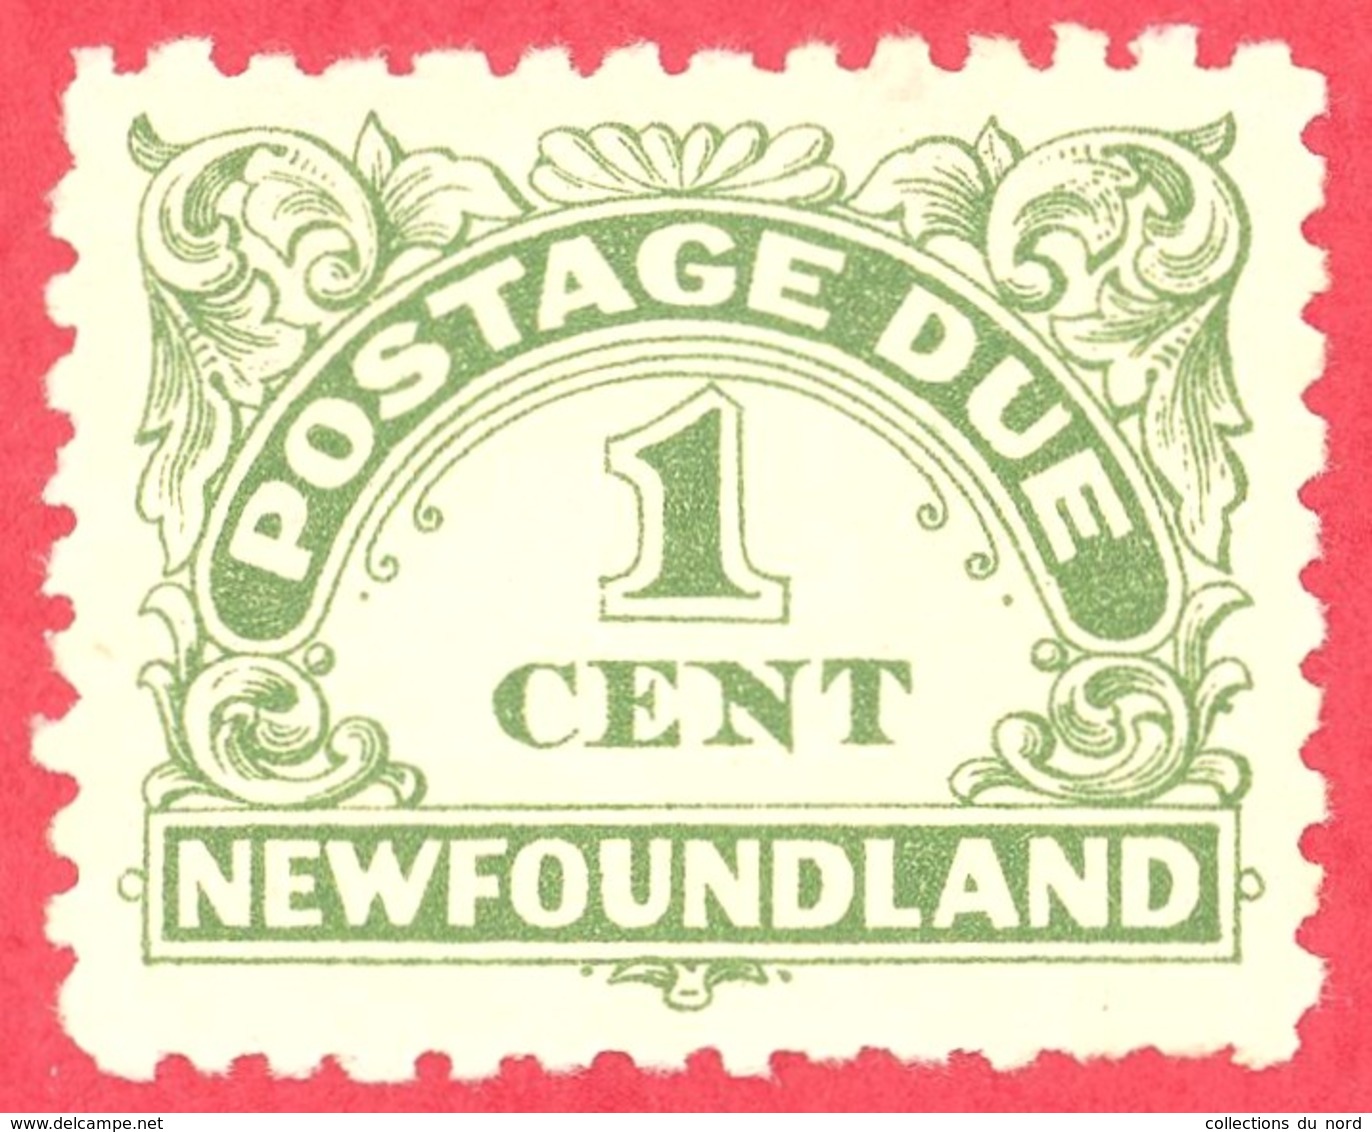 Canada Newfoundland # J1 Mint VF - Postage Due - Back Of Book